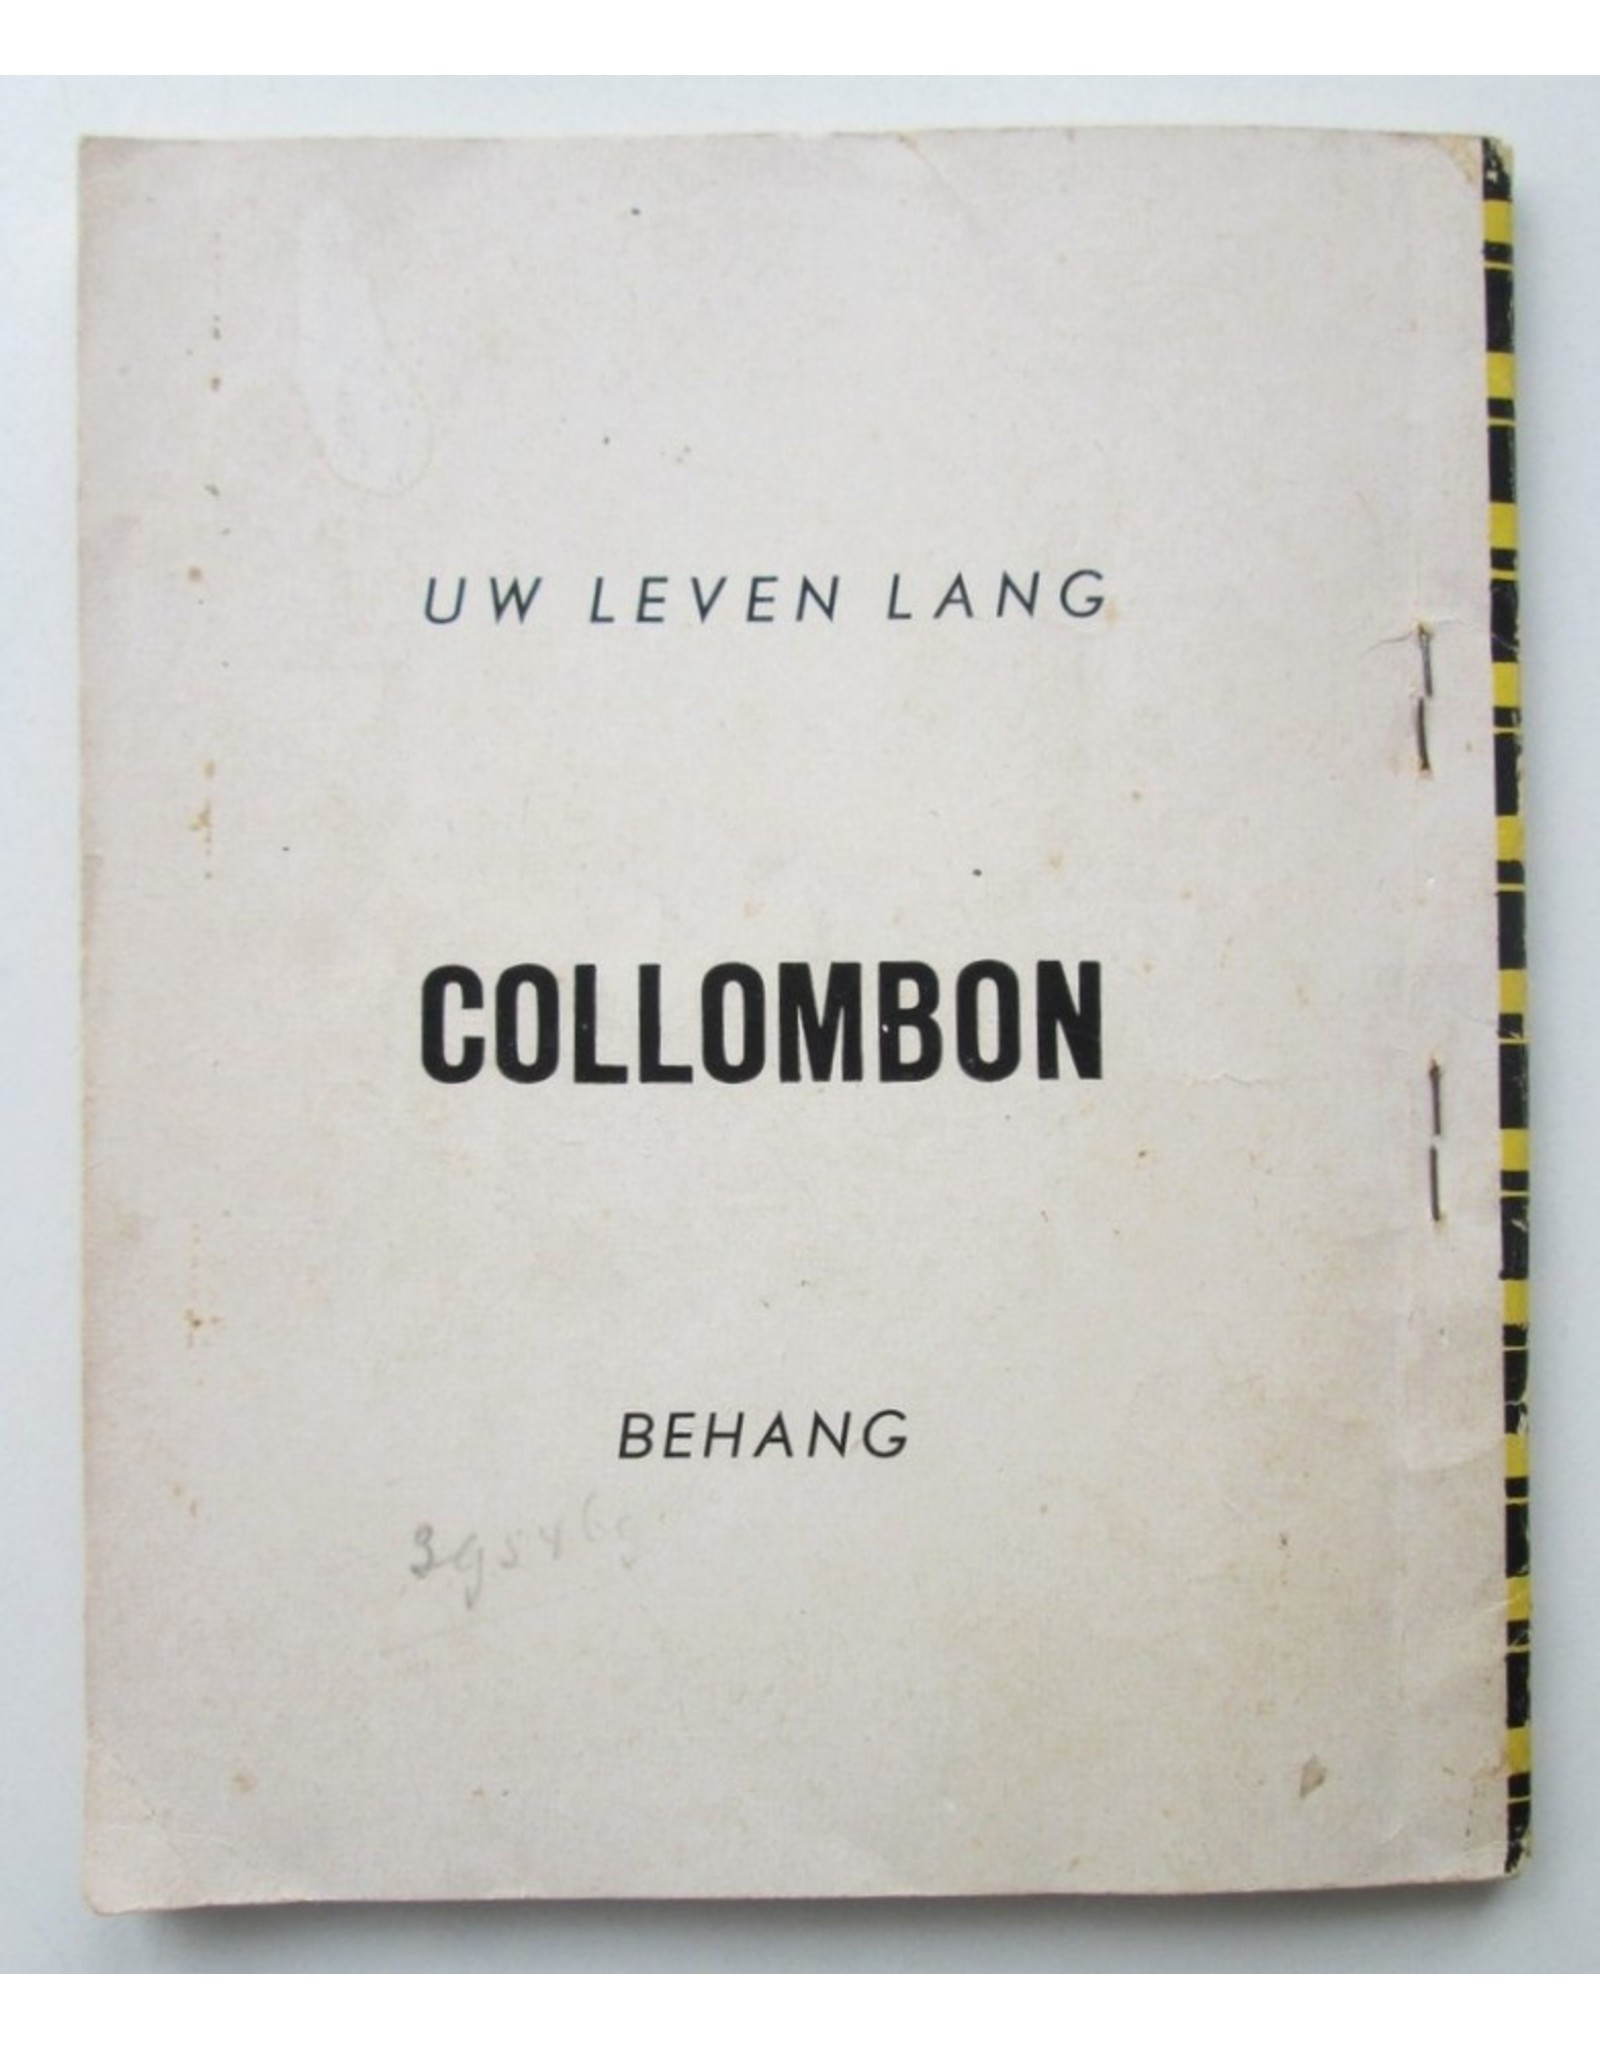 [Nellie Donker] - Uw leven lang... Collombon Behang!